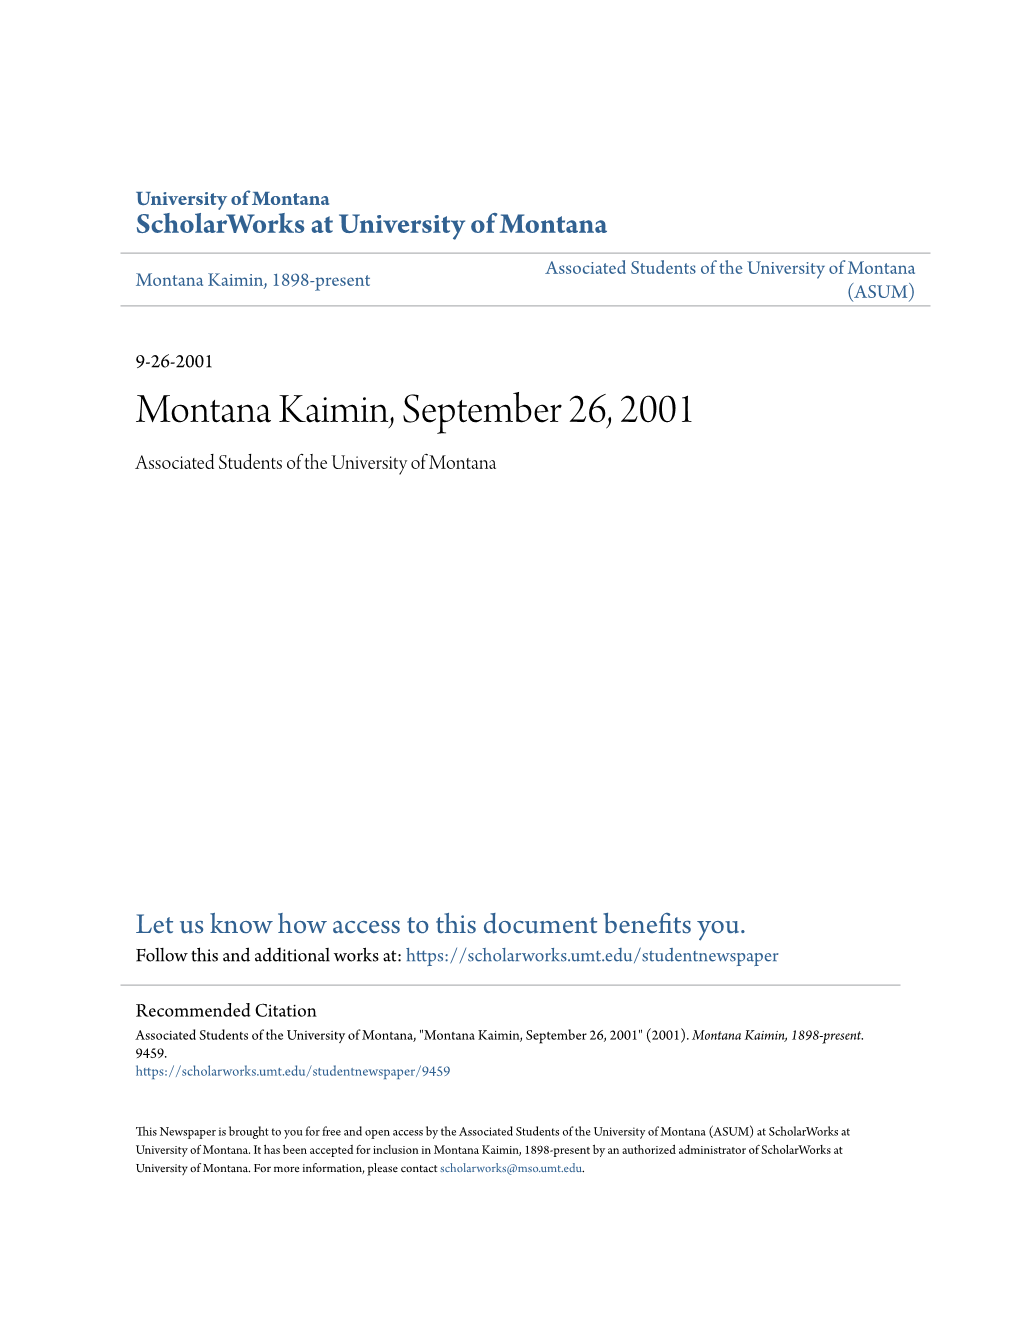 Montana Kaimin, September 26, 2001 Associated Students of the University of Montana